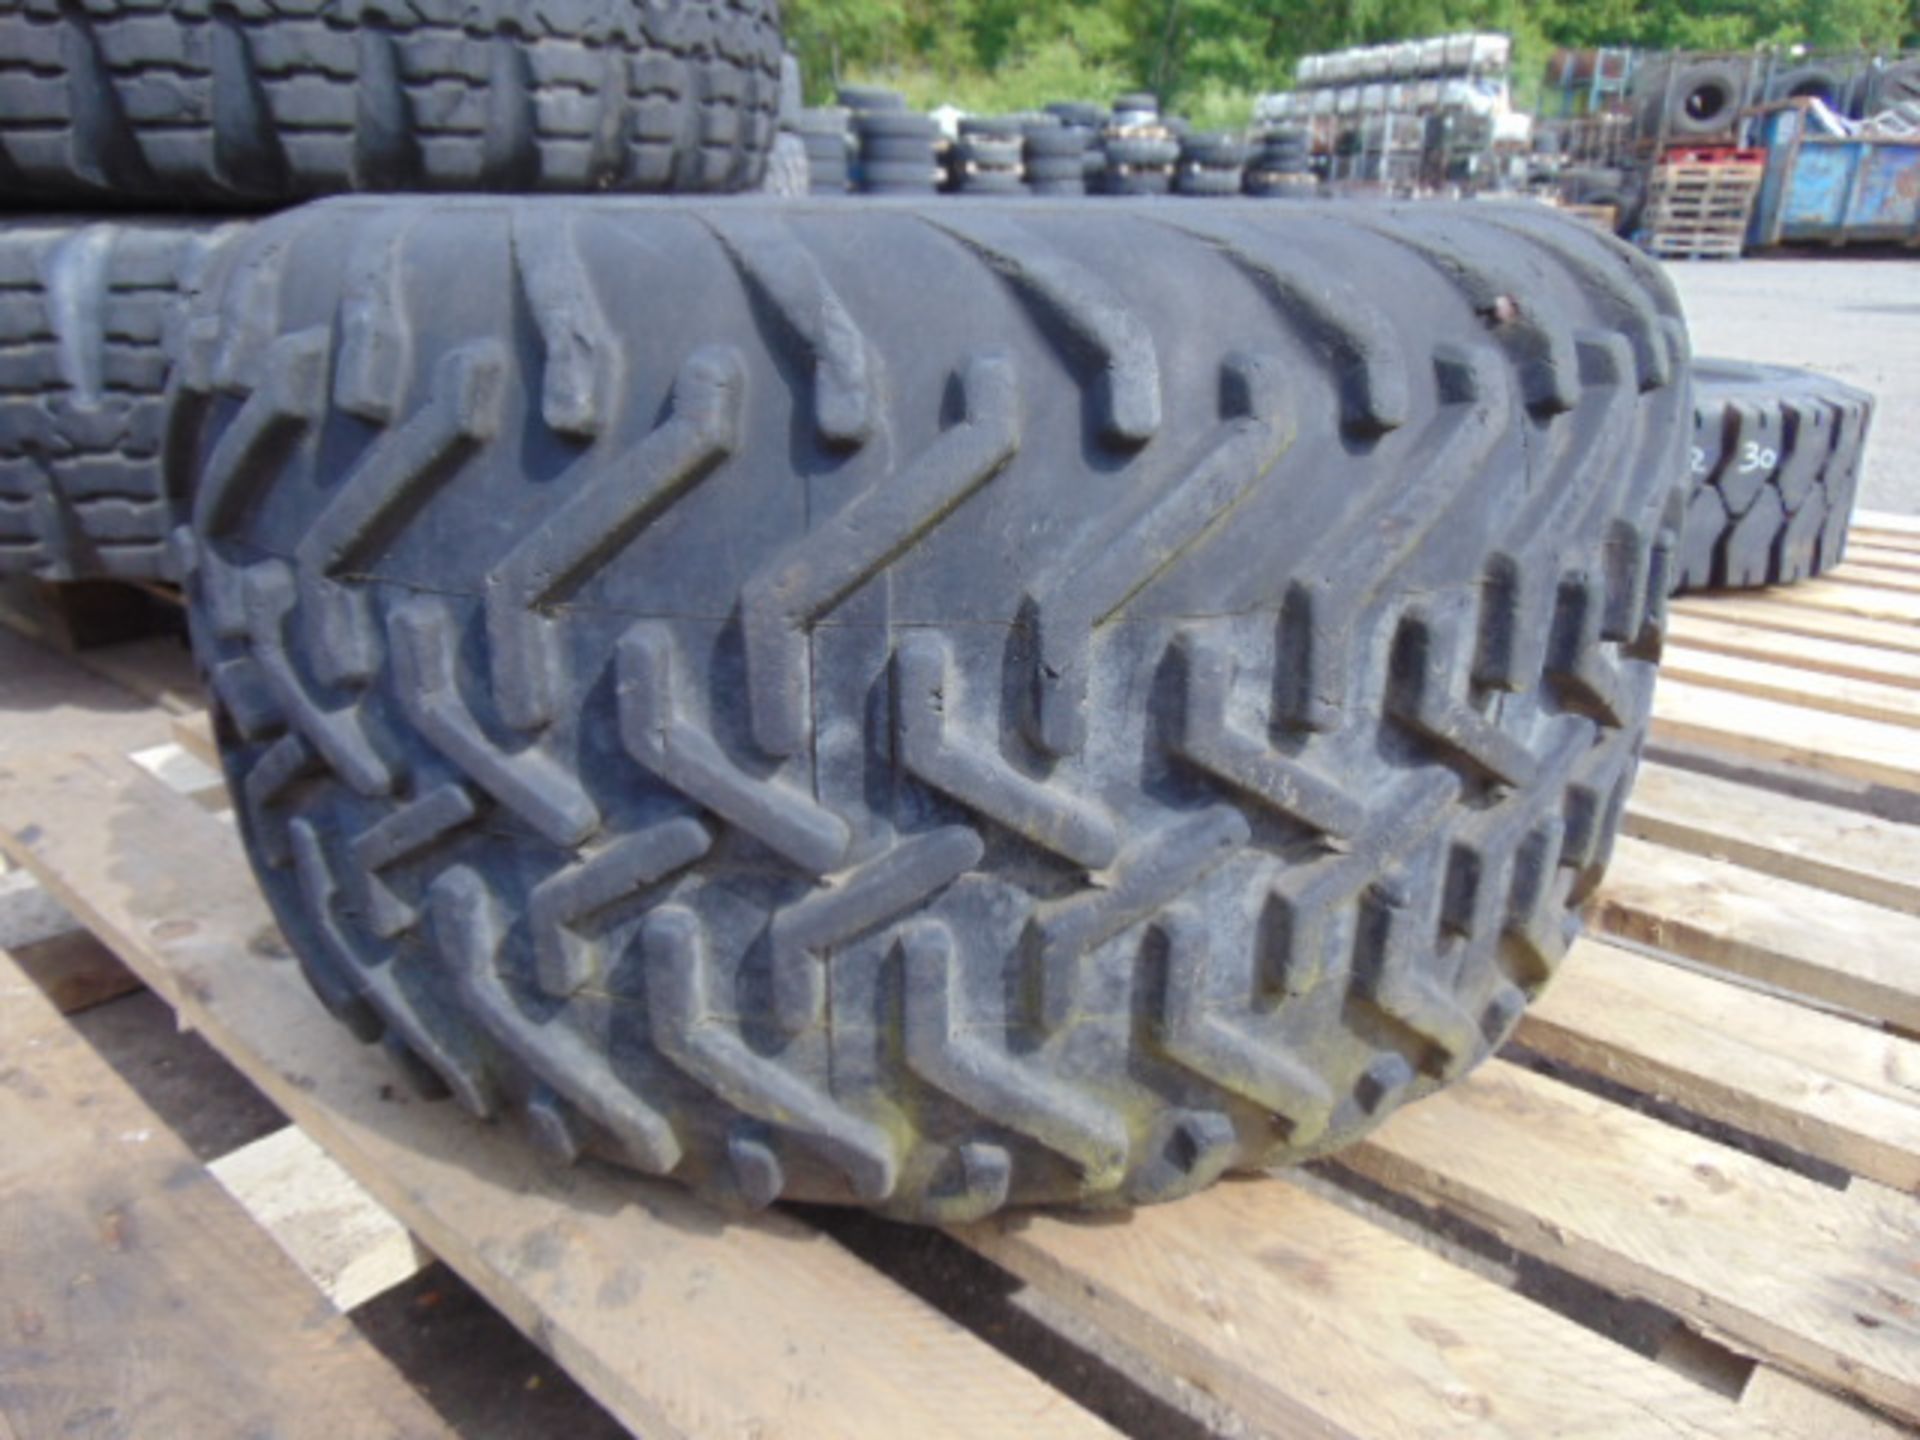 1 x Simex Tredlite 31X15.50-15 Tyre on a 5 stud Rim - Image 2 of 6